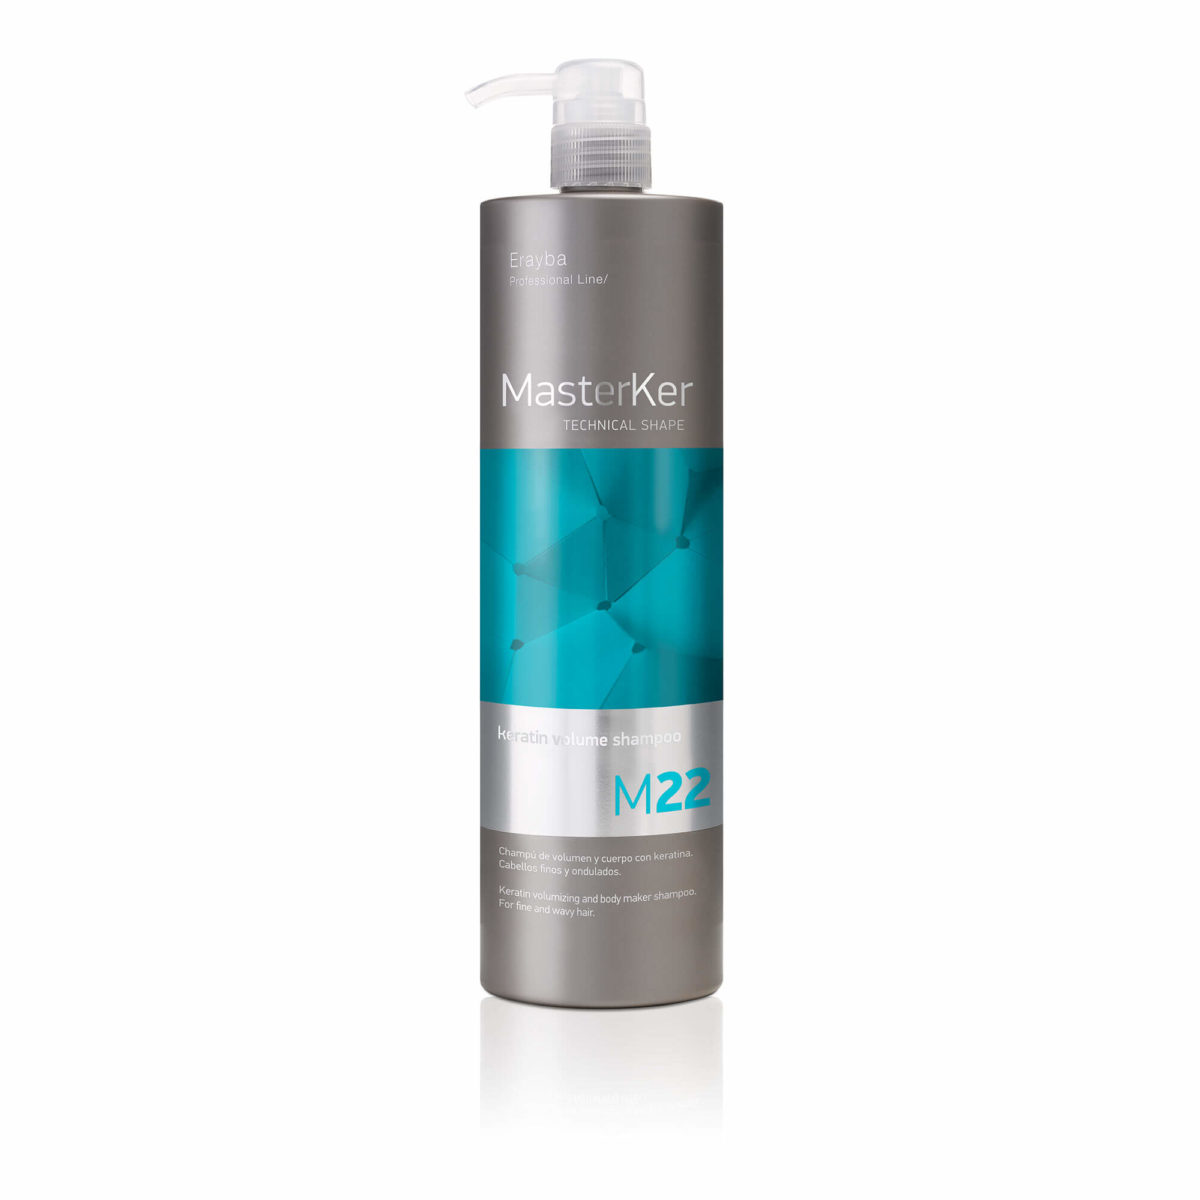 MasterKer M22 keratin volume shampoo 1l